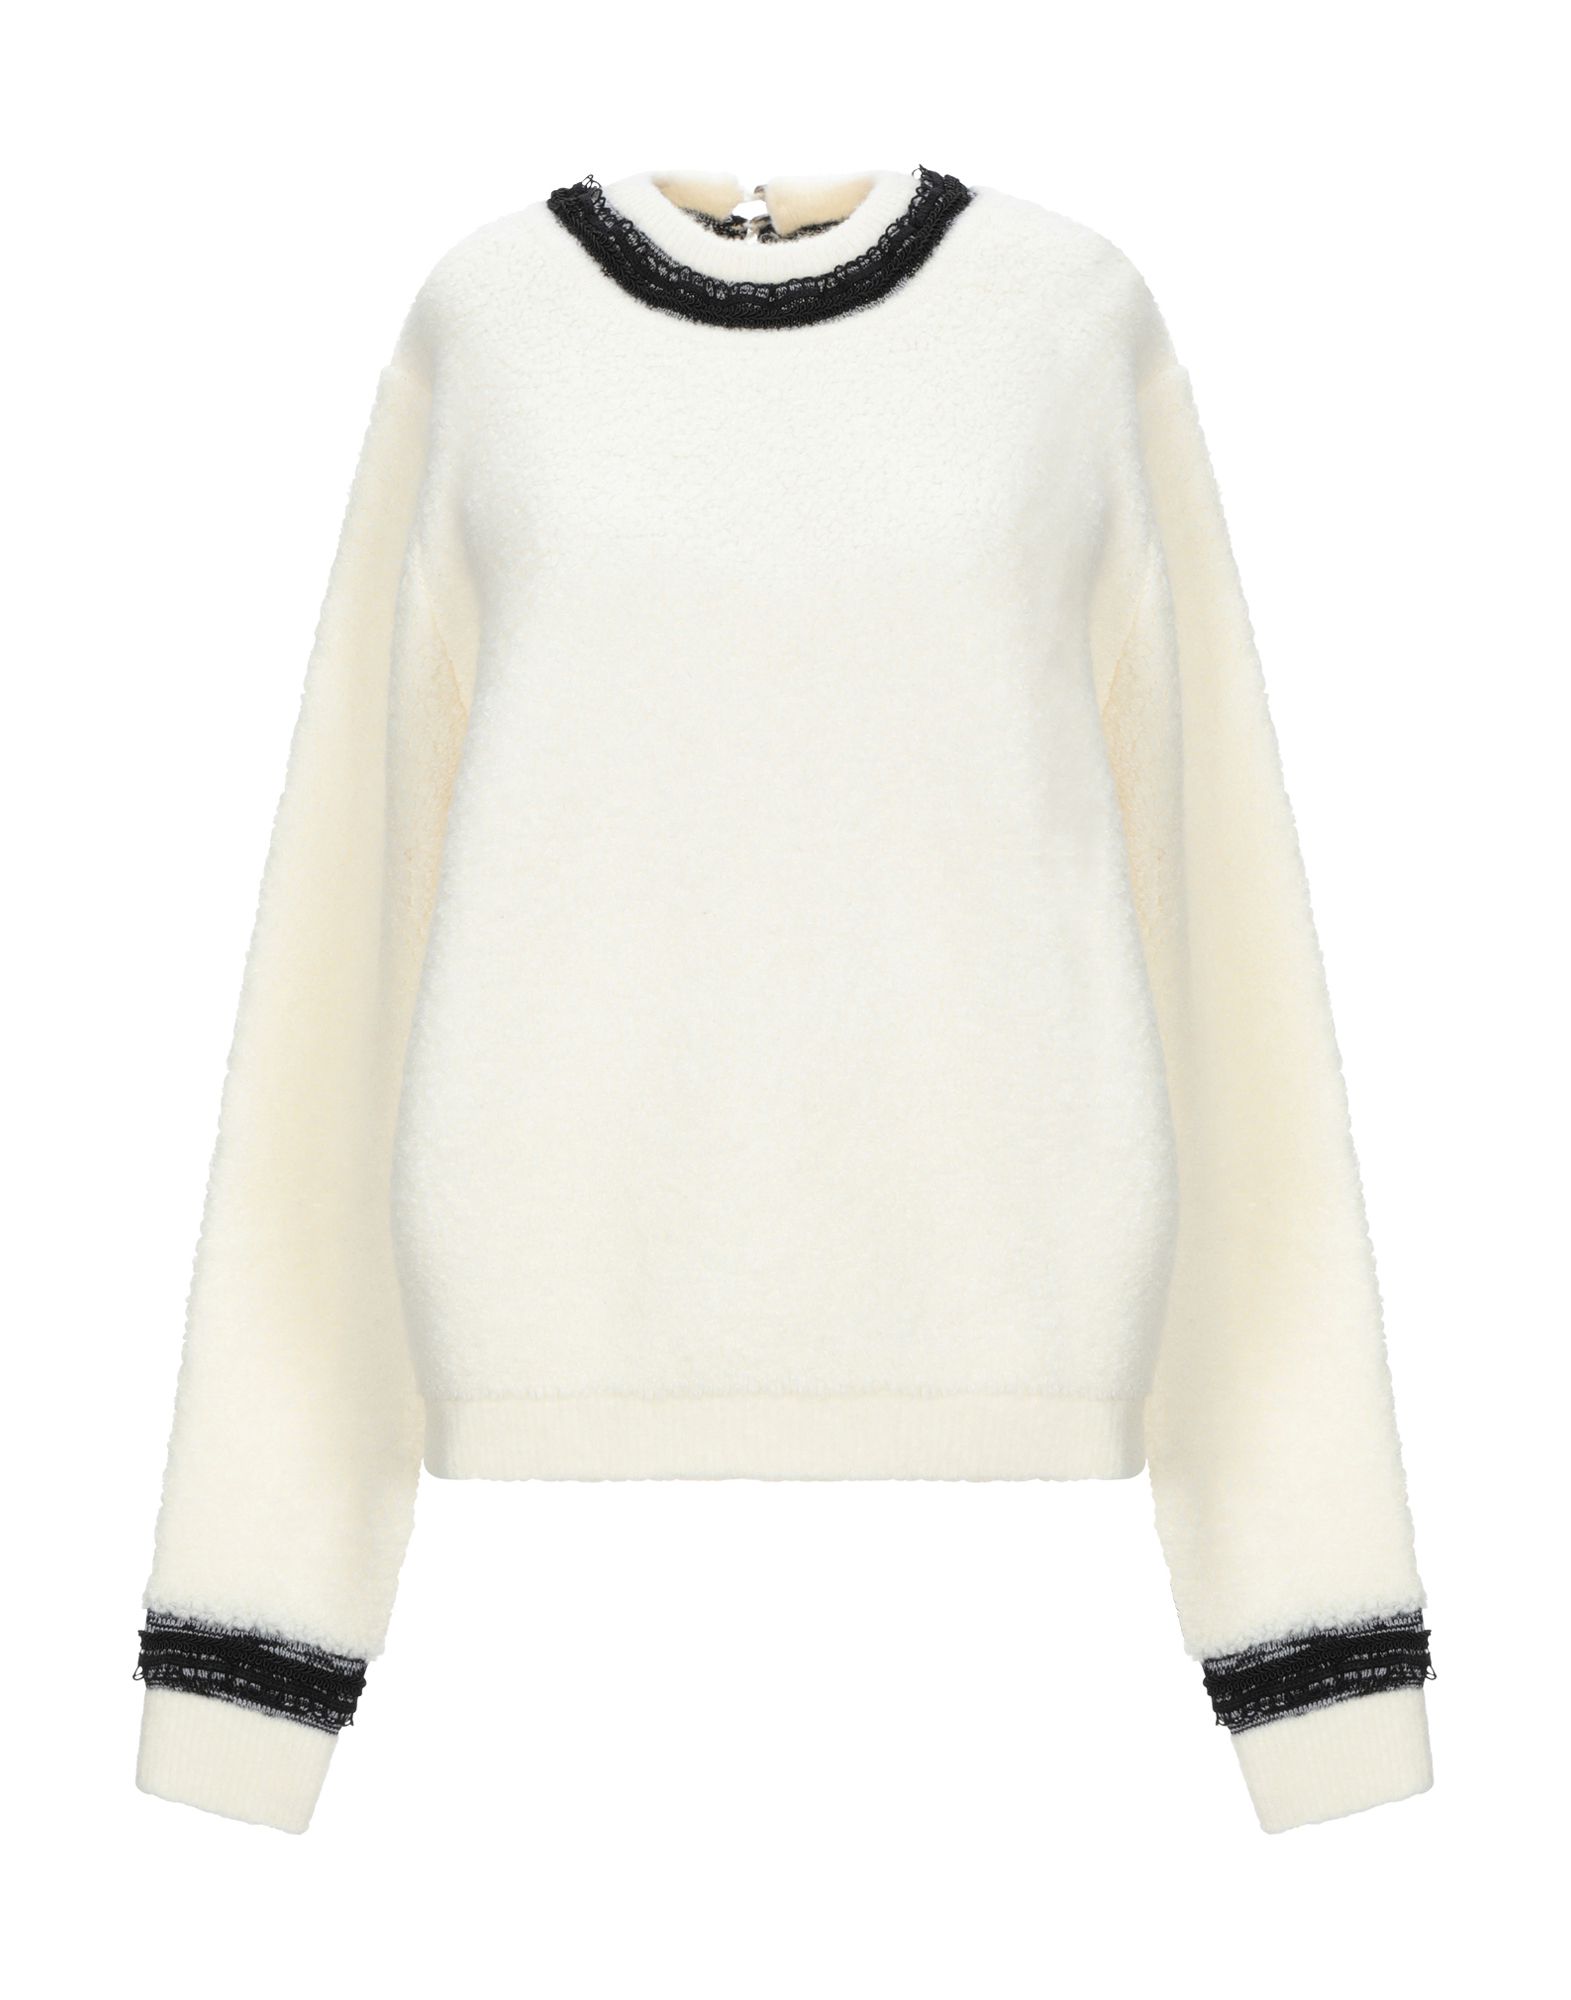 BALLANTYNE Sweaters - Item 39965604